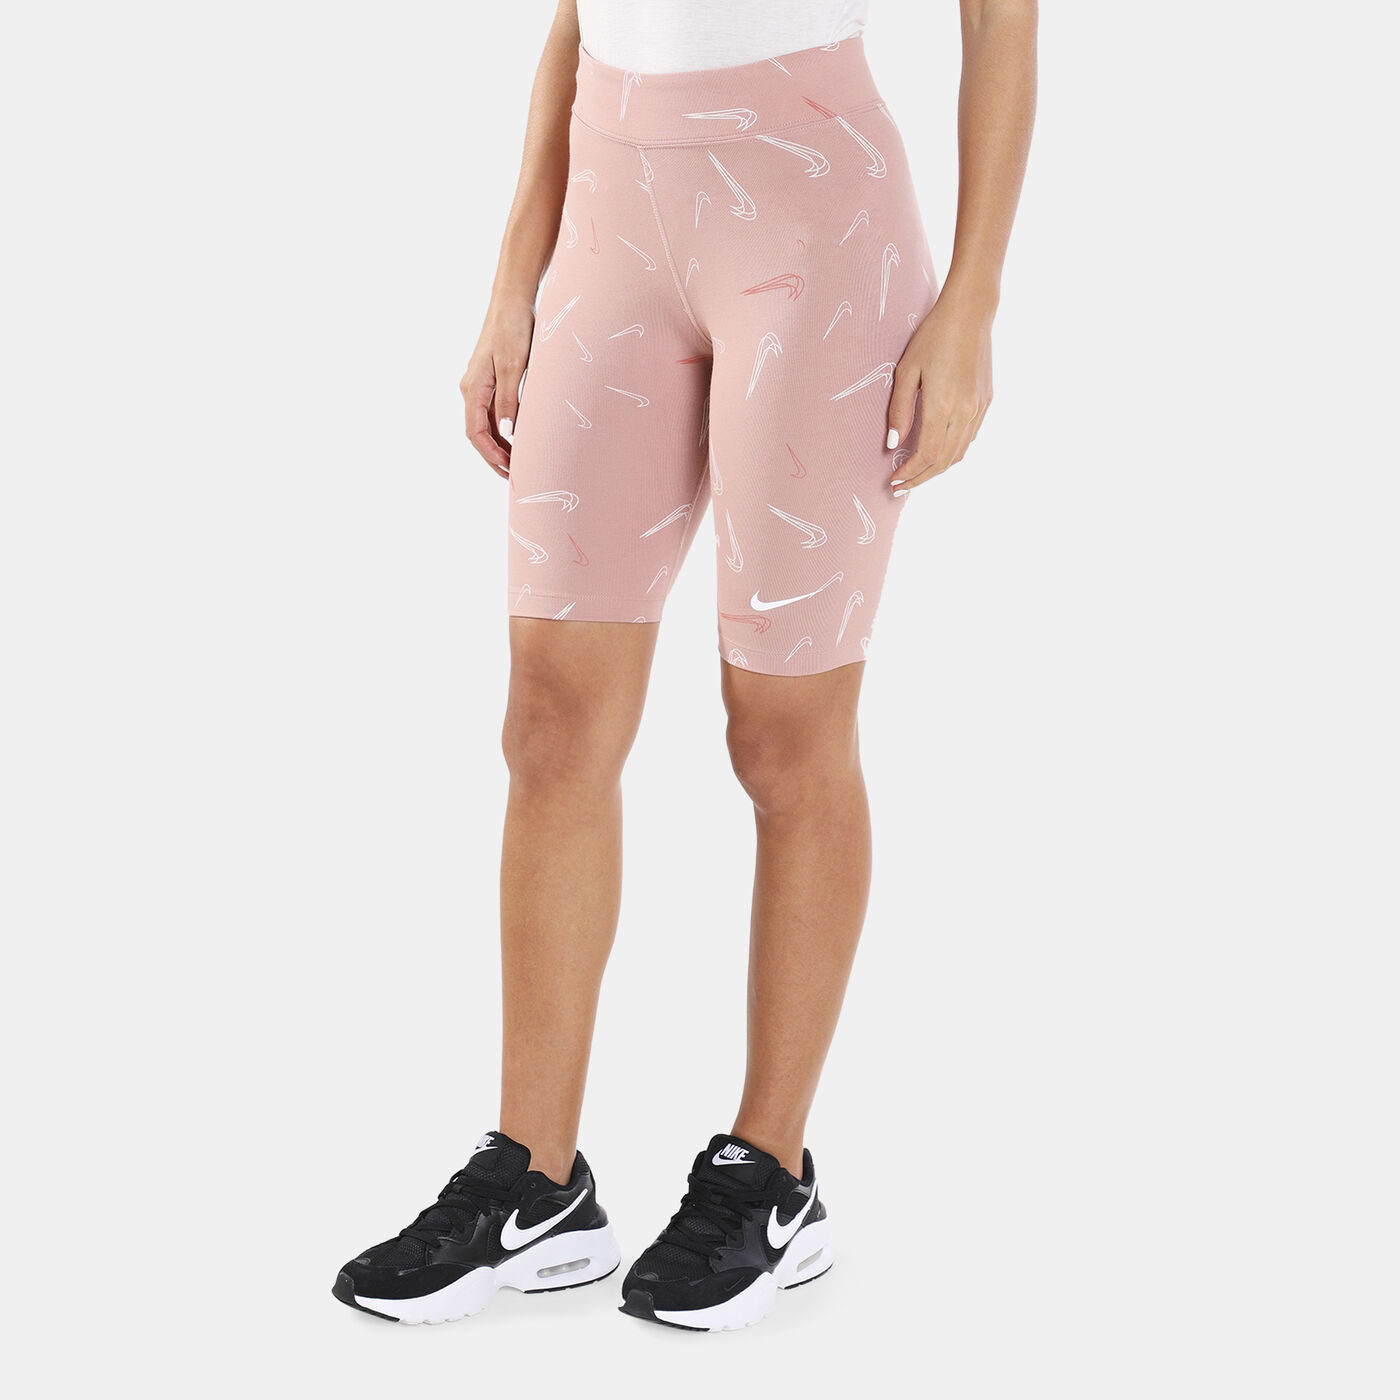 Women's Sportswear Allover Print Bike Shorts